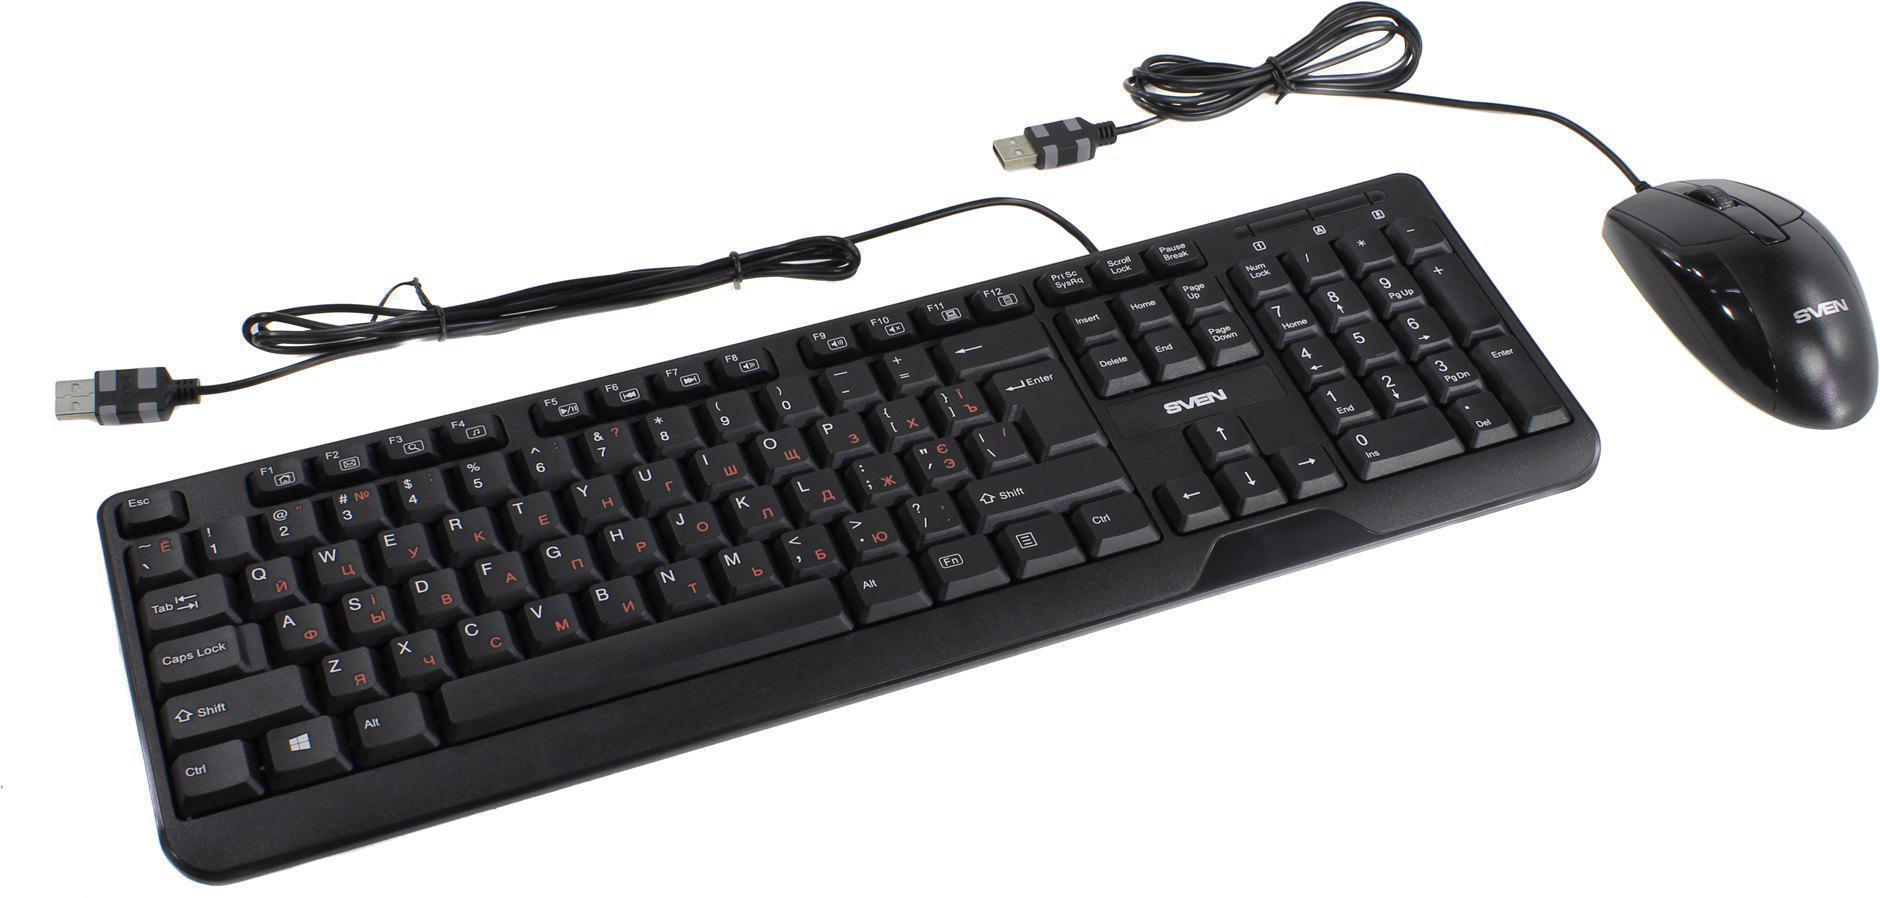 Kk 3330s. Комплект USB Sven KB-s330c клавиатура + мышь черный. Клавиатура + мышь Oklick 600m. Набор клавиатура+мышь Sven KB-s330c черный. KK-3330s USB (Black).